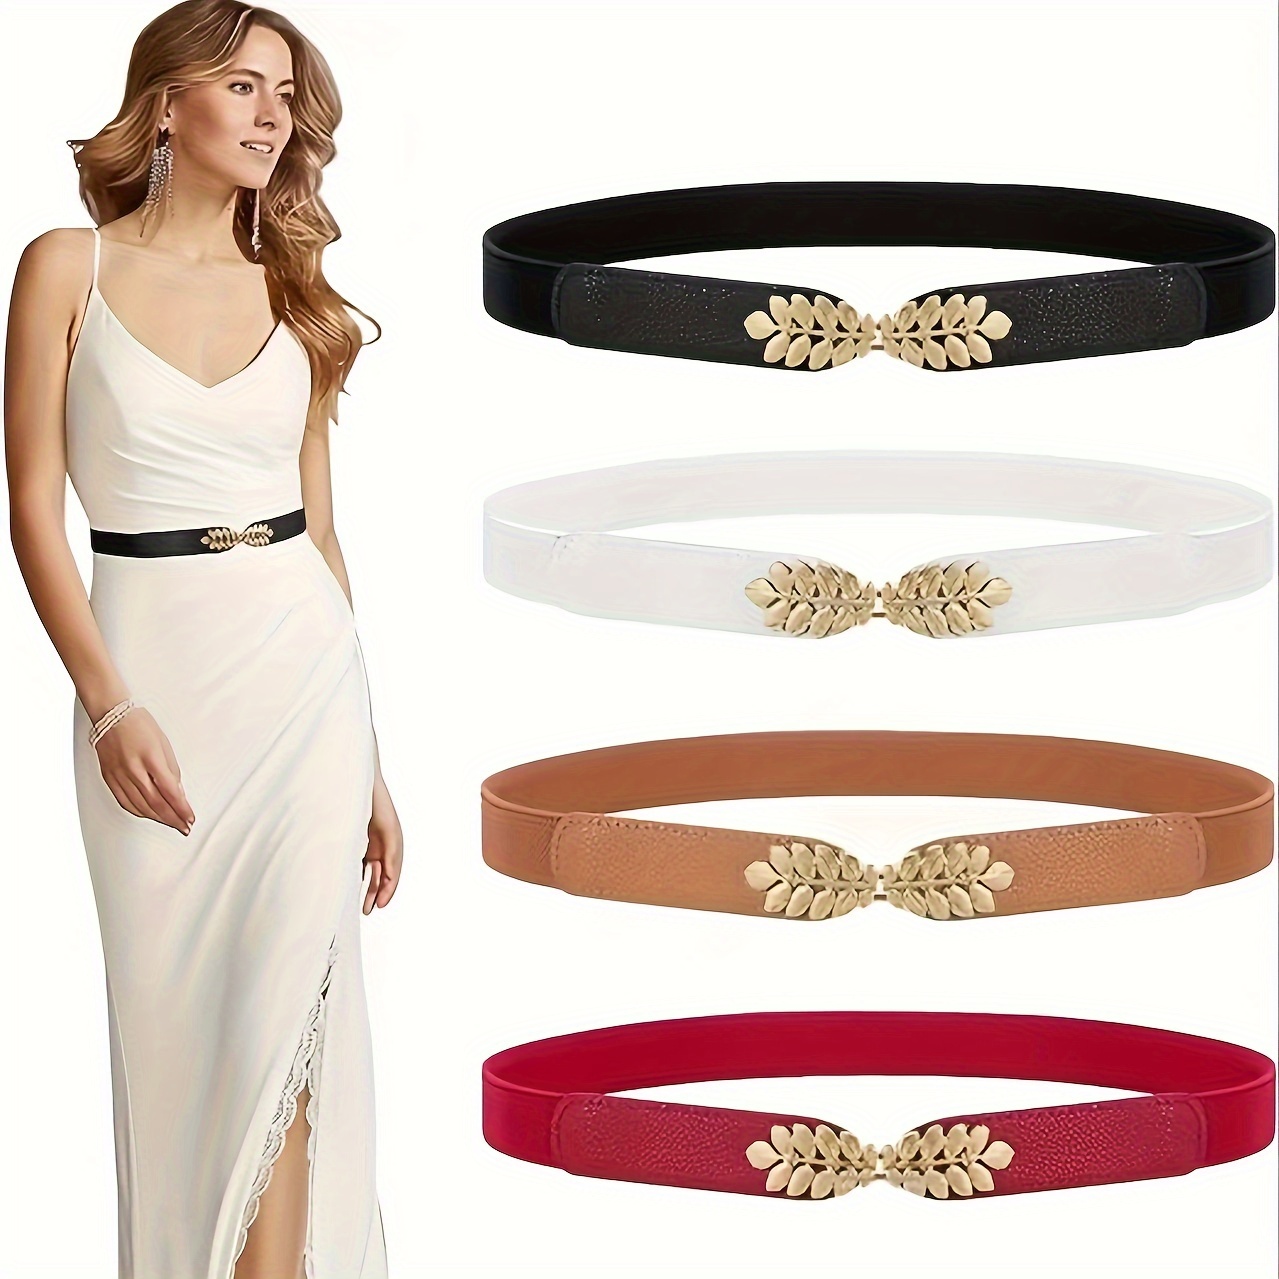 

Fashion Elastic Waist Belt For Women - 4pcs Decorative Dress Belts, Versatile Thin Waistband With Fashion Sewing Fasteners Spy14